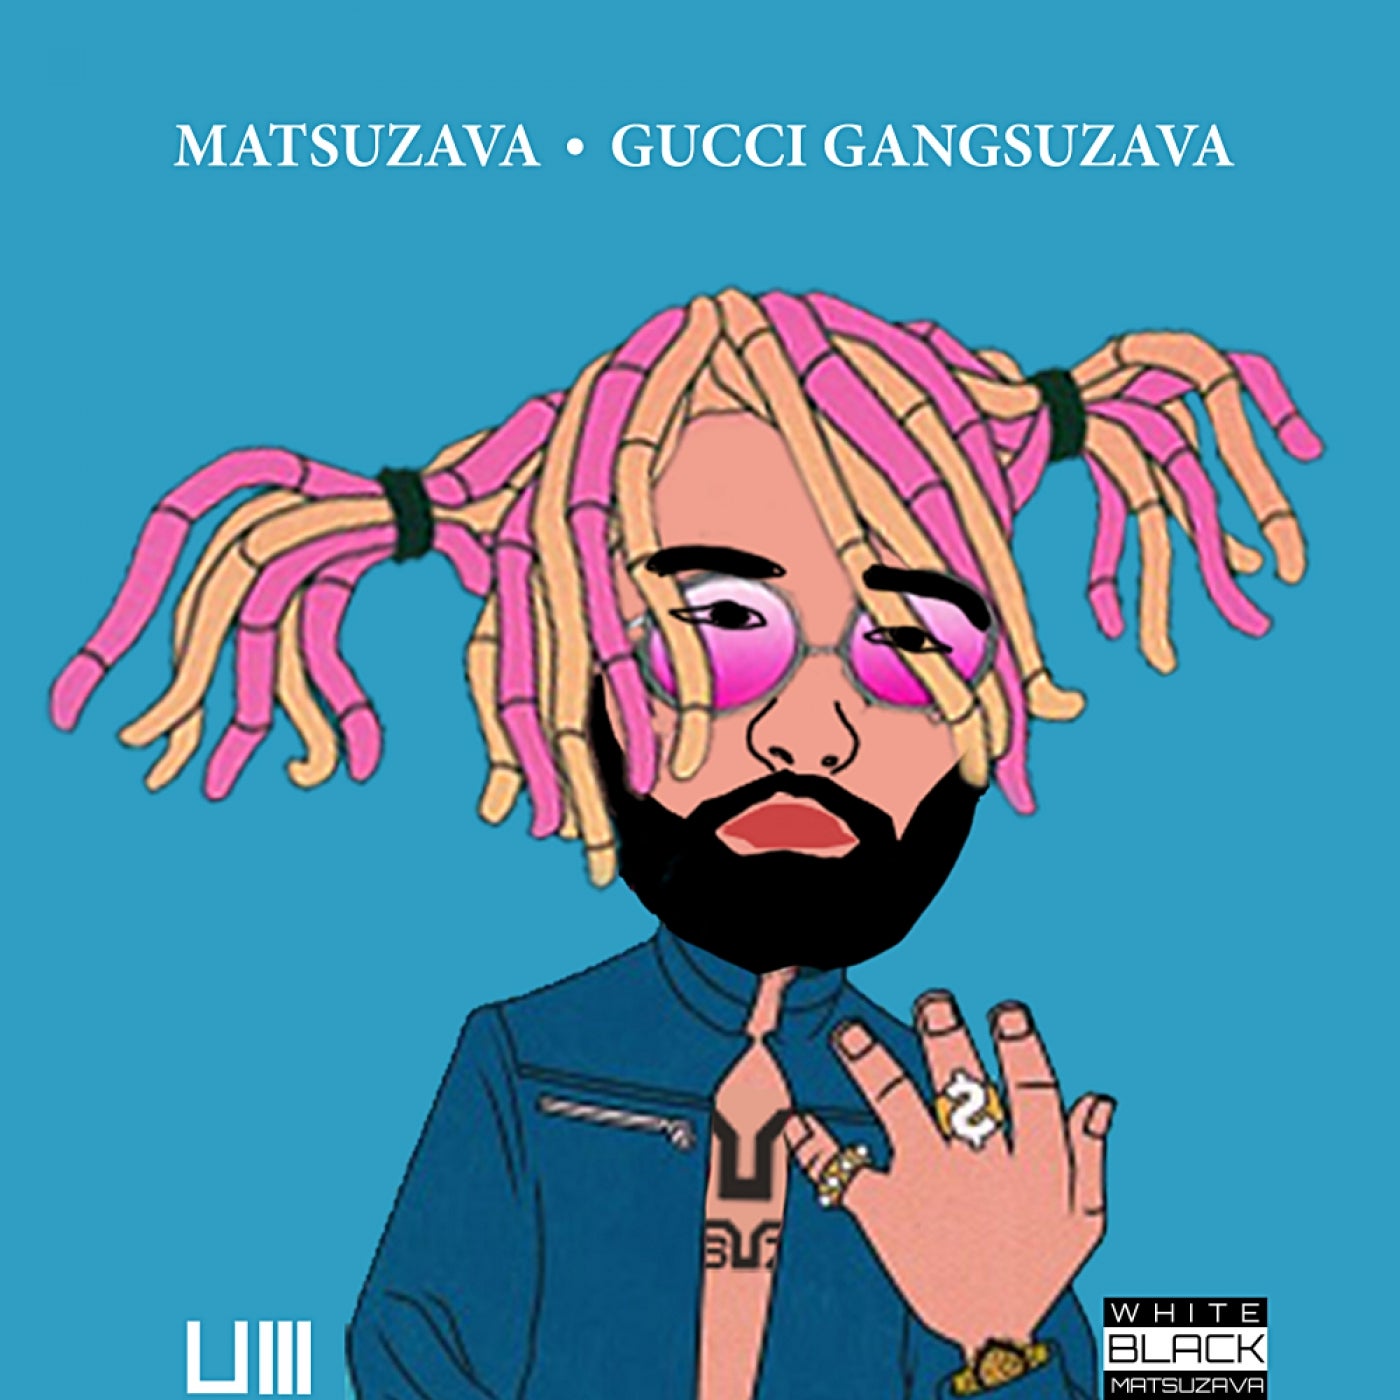 Gucci Gangsuzava